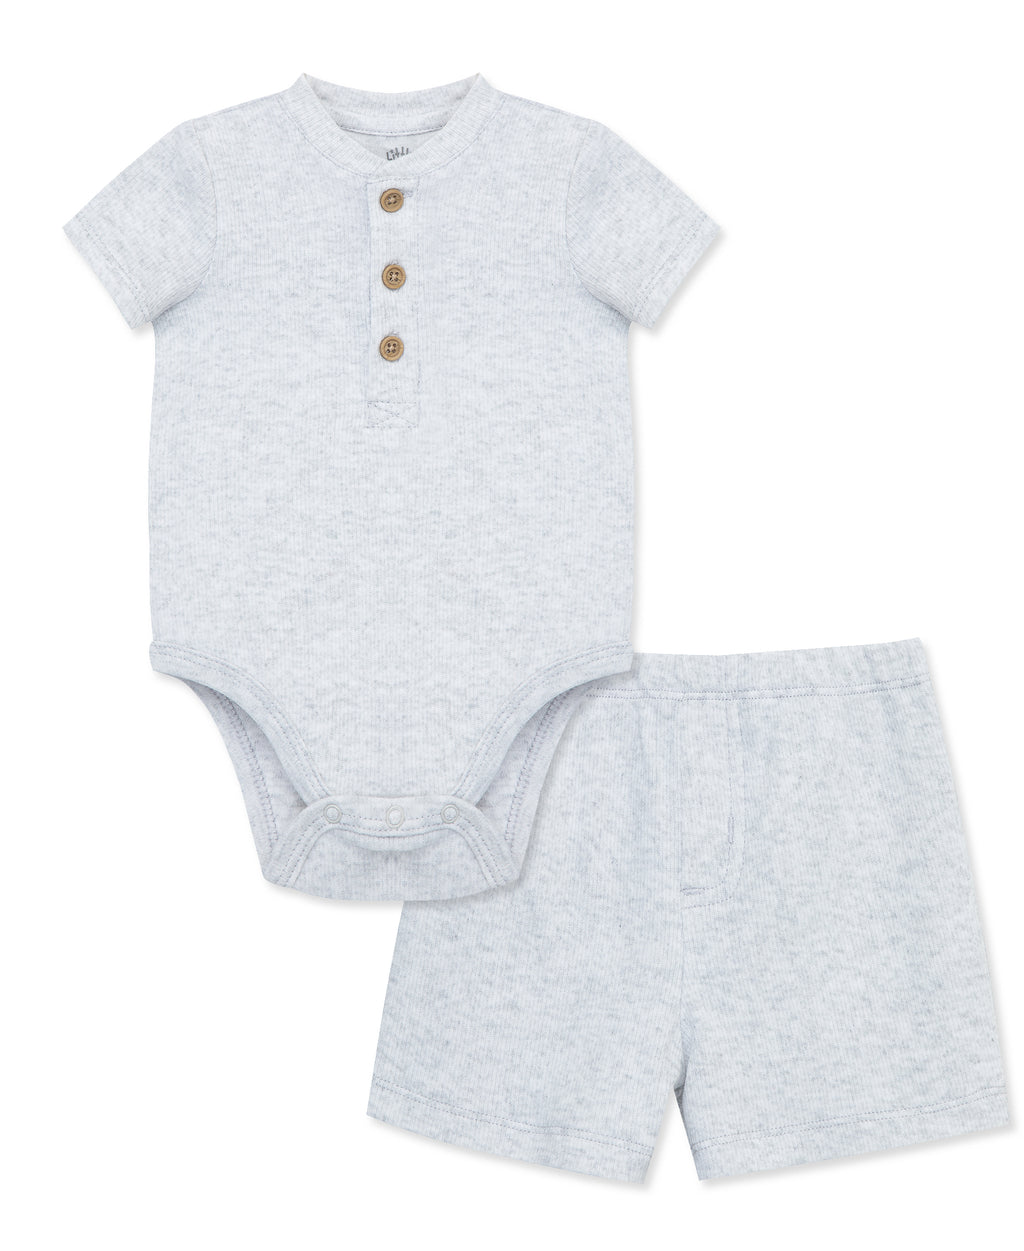   Essentials Unisex Babies' Organic Cotton Short